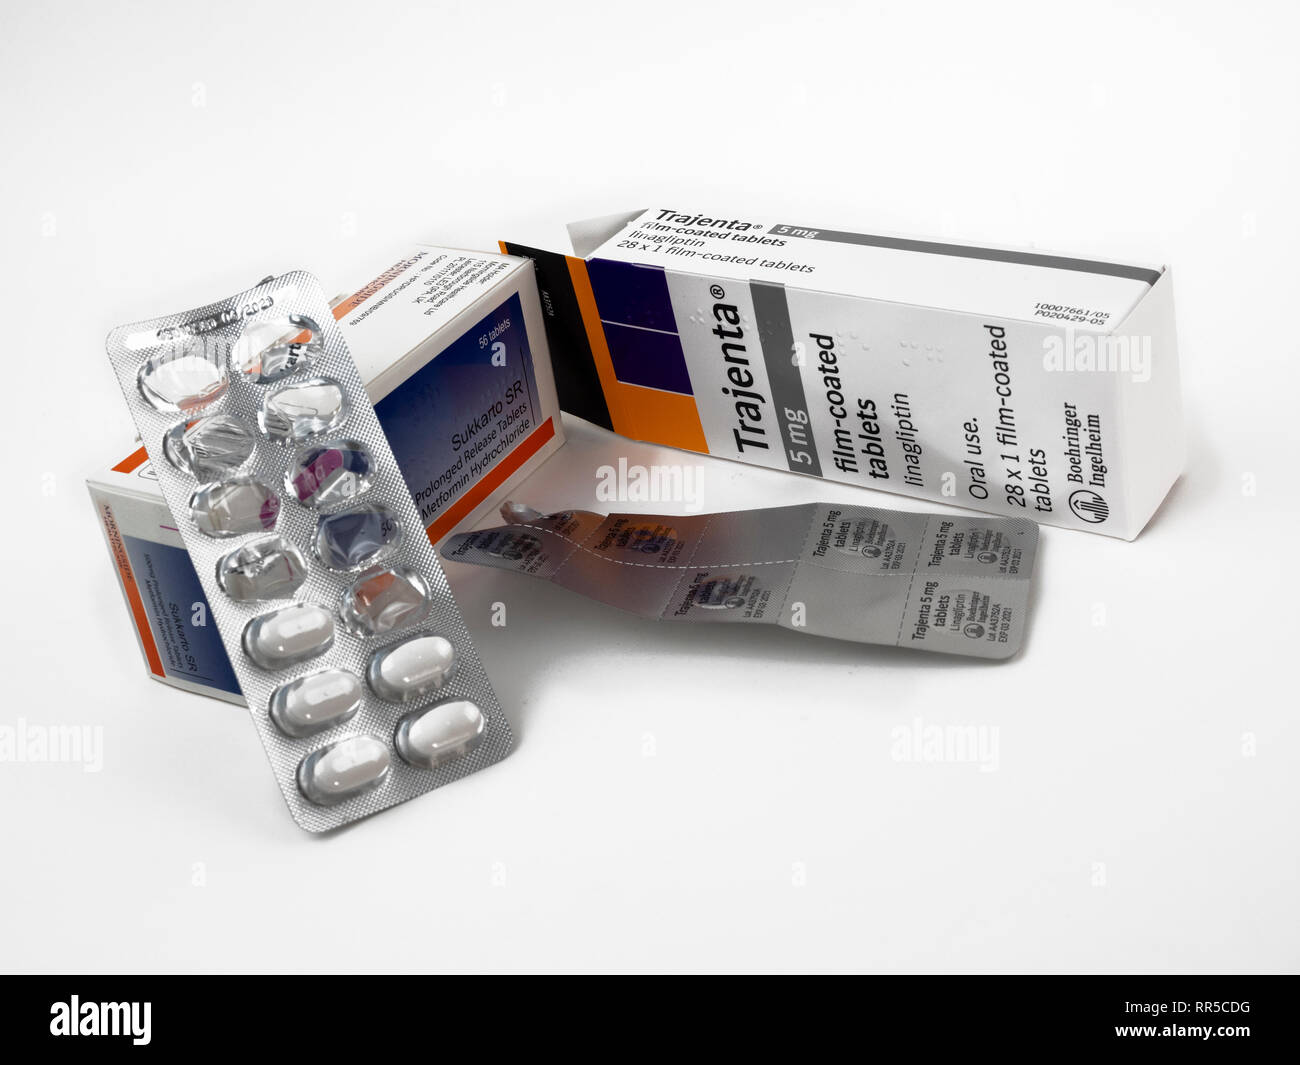 Slow release Metformin and linagliptin (Trajenta) medication for Type 2 diabetes Stock Photo